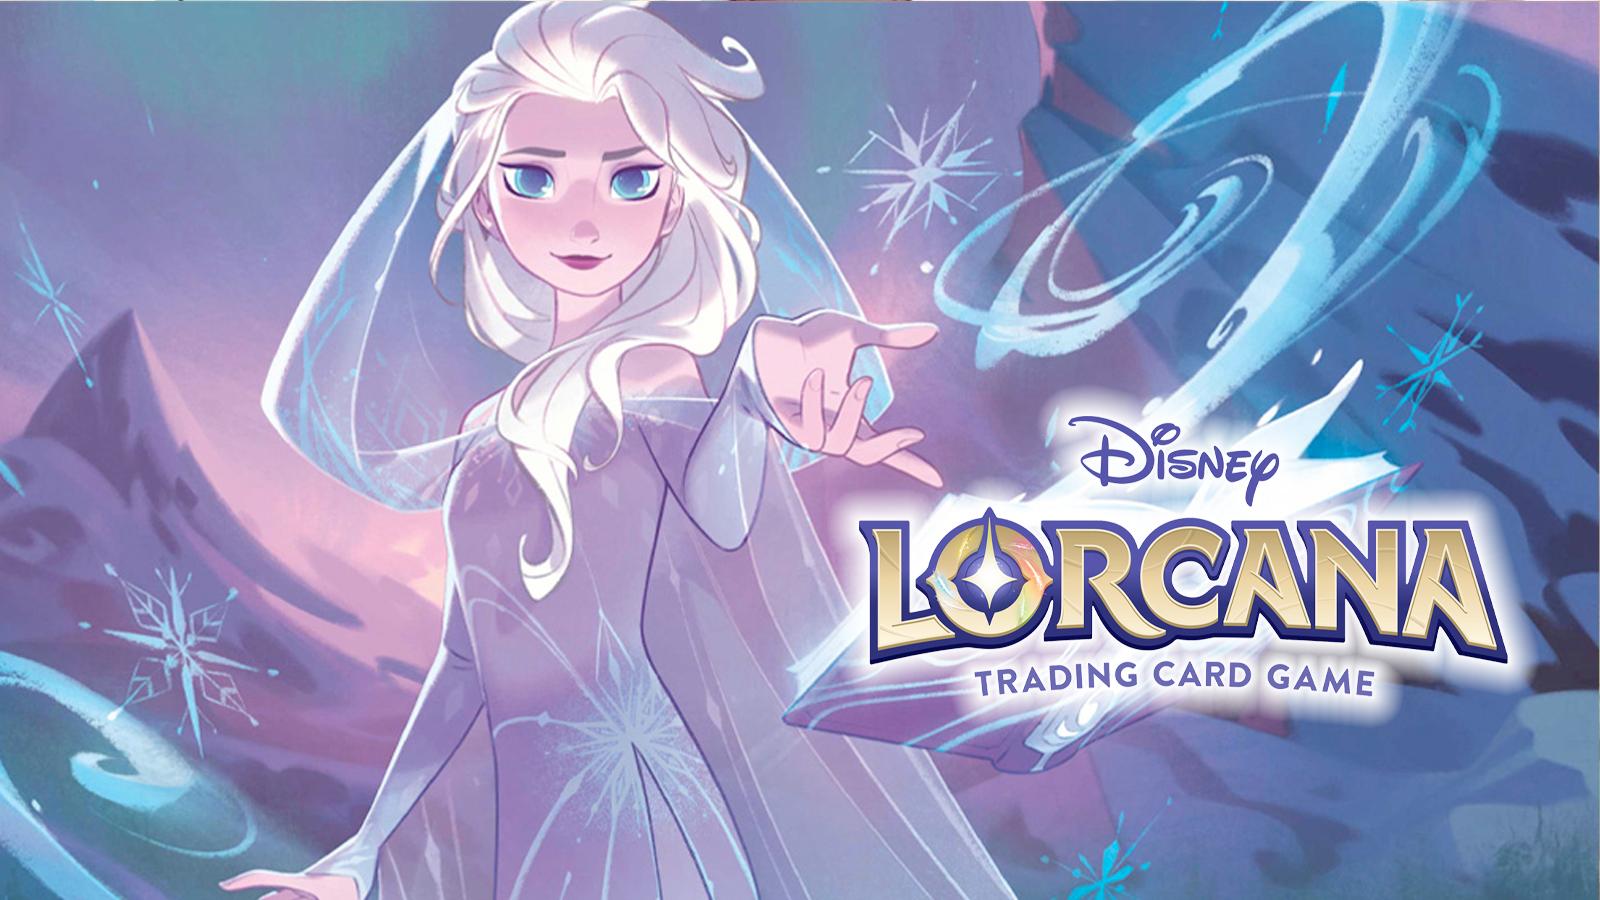 Disney Lorcana logo with Elsa in background